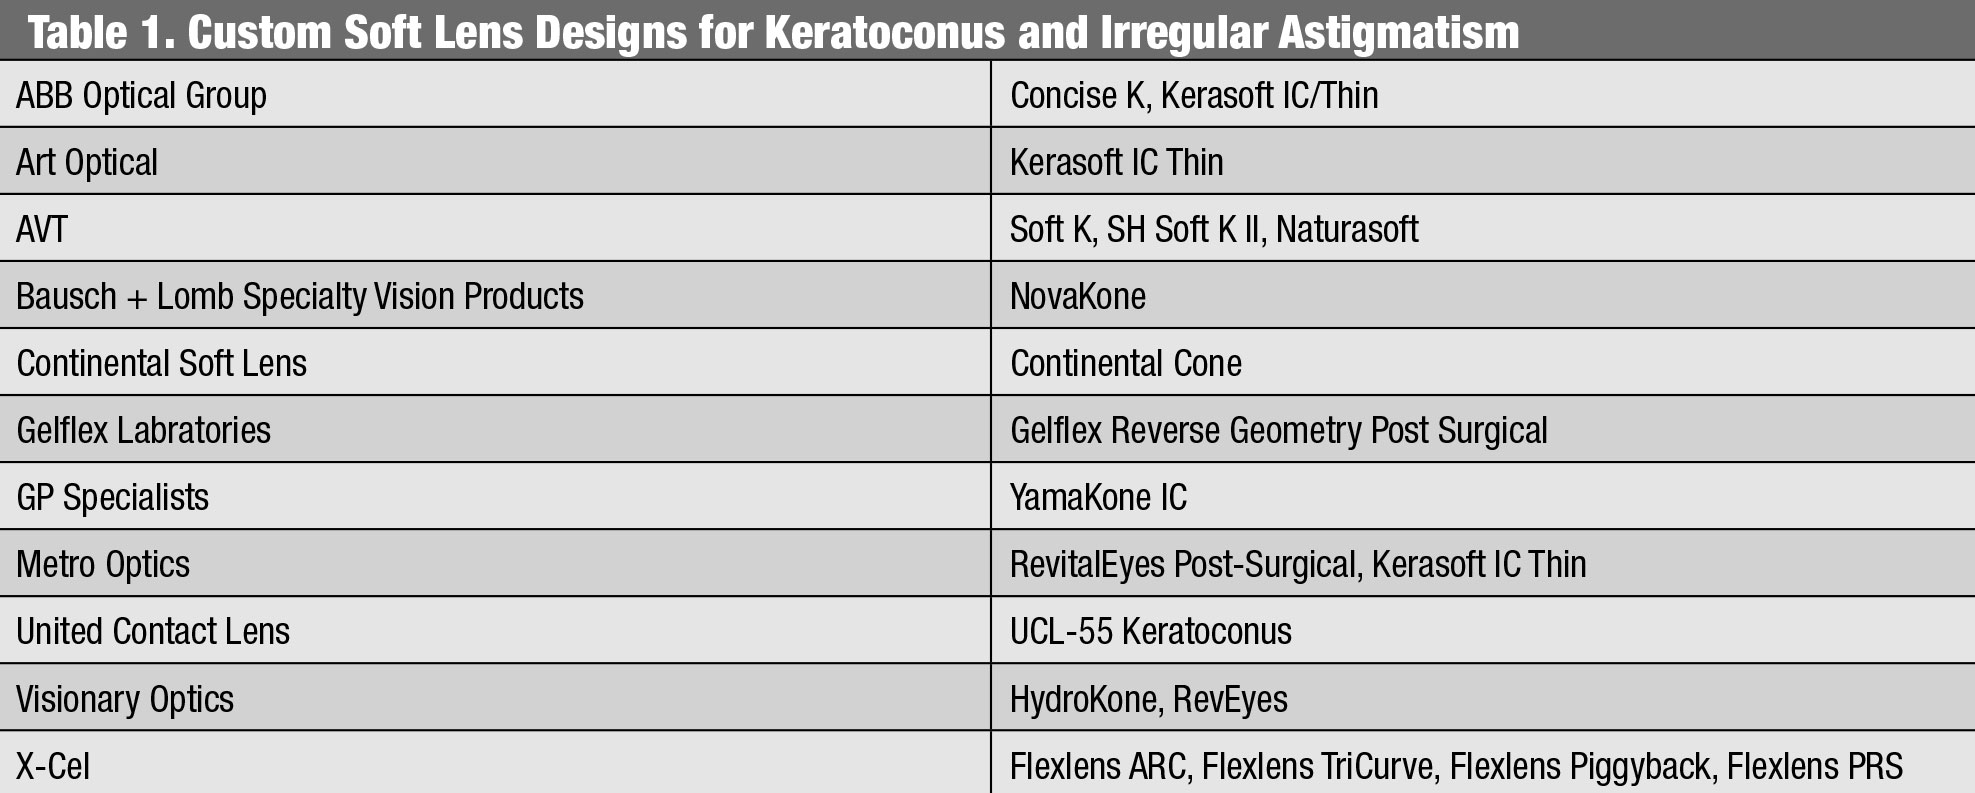 Custom Soft Lens Designs for Keratoconus and Irregular Astigmatism.